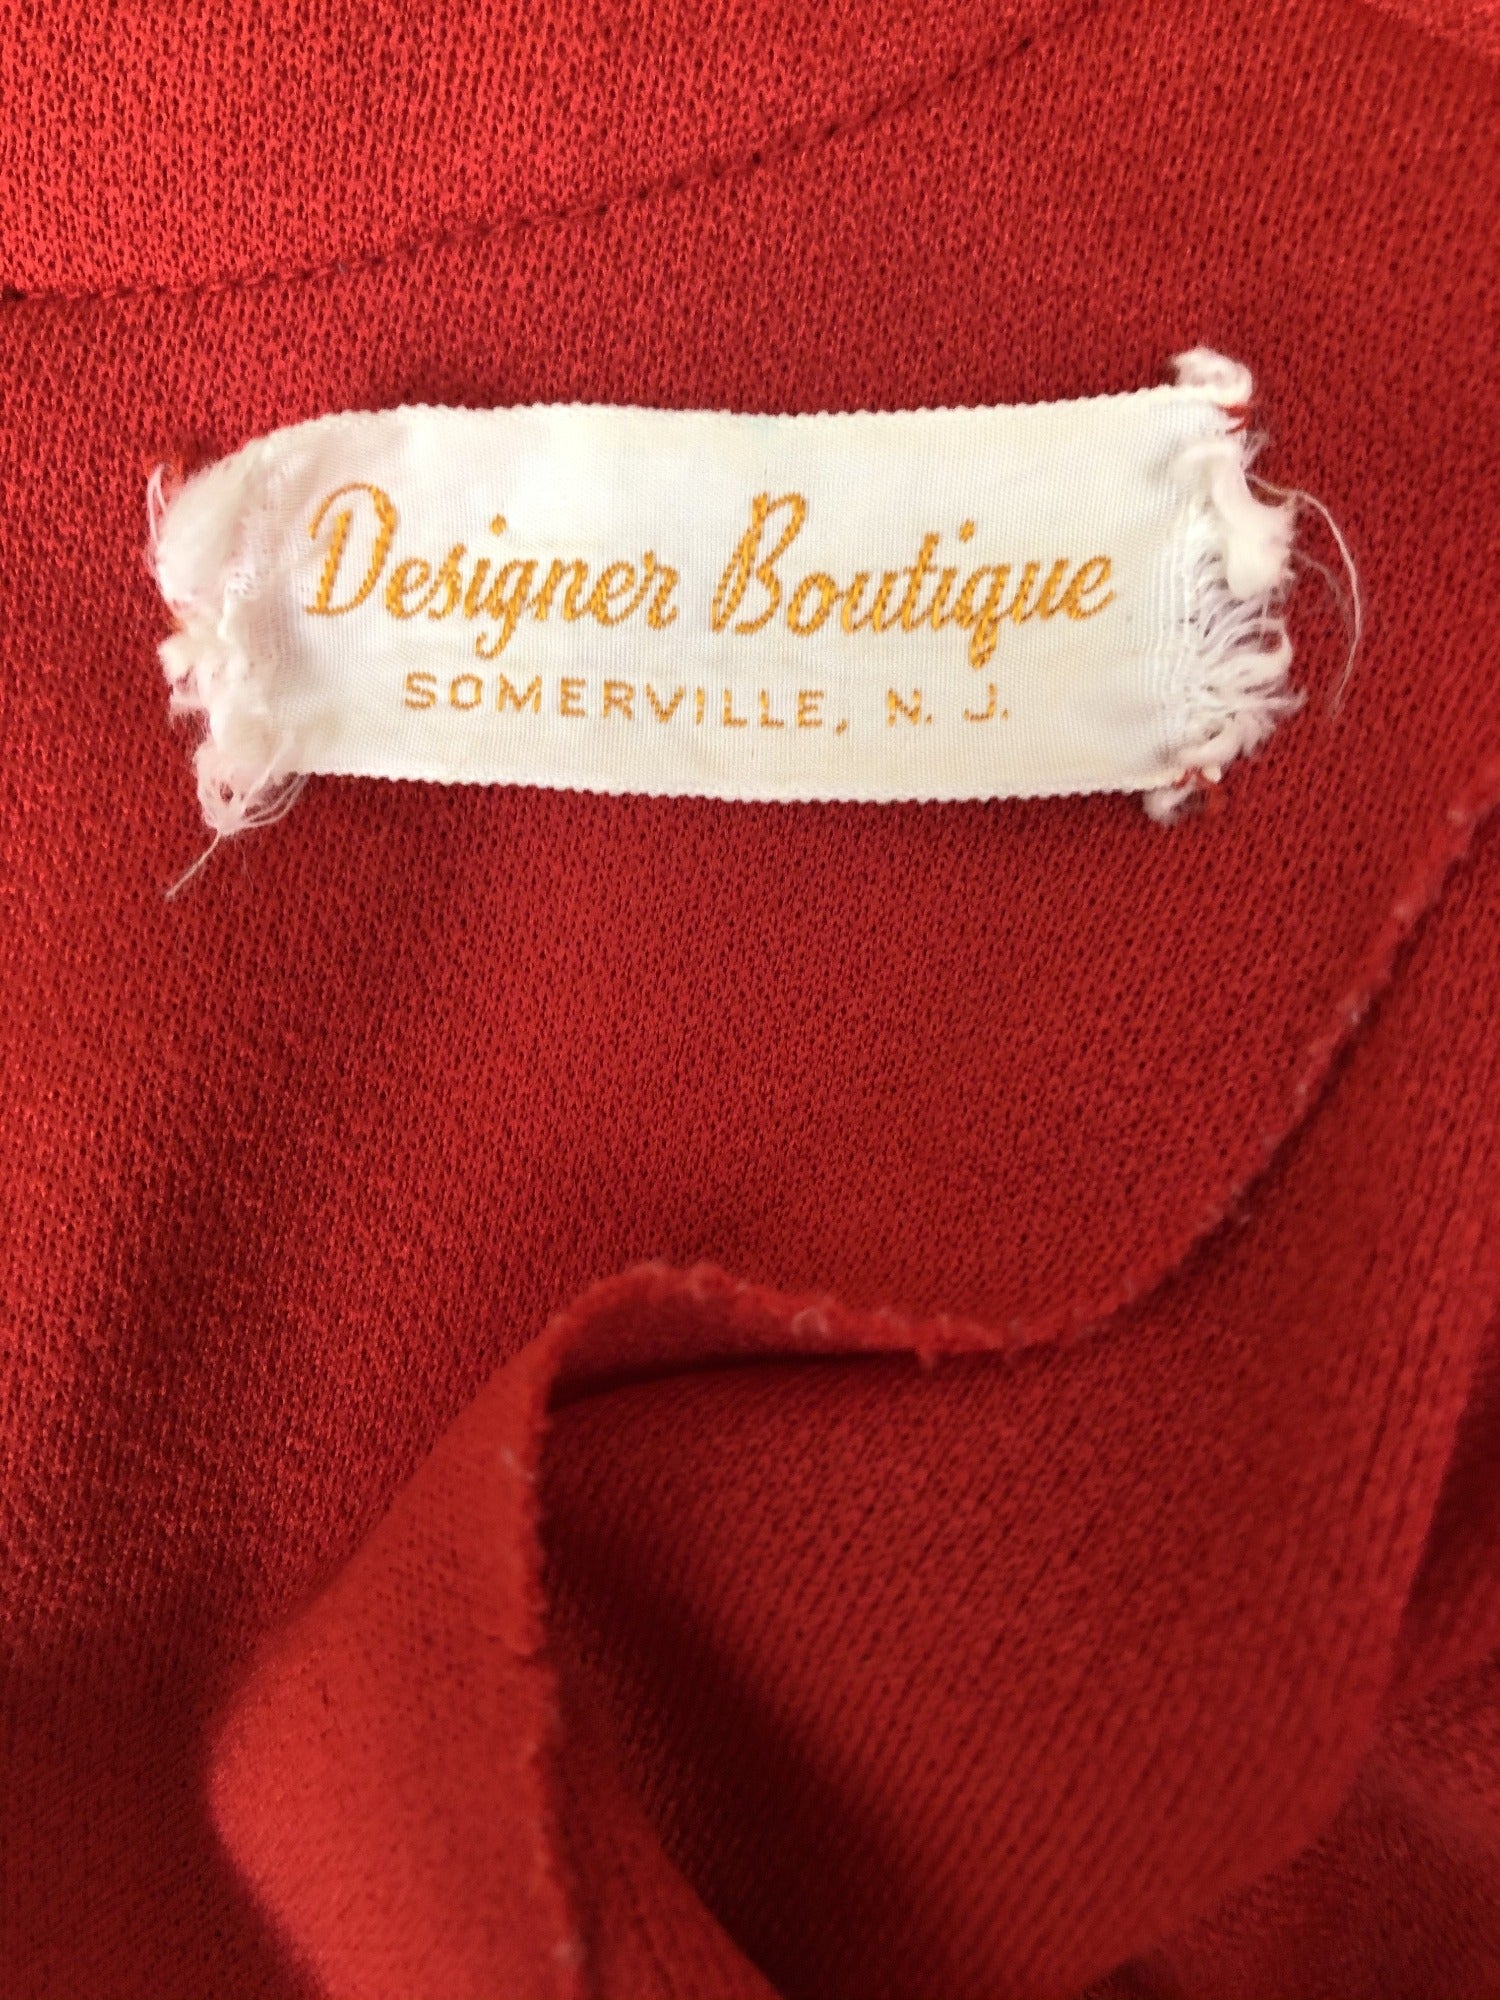 womens  waist belt  vintage  v neck  Urban Village Vintage  Red  midi dress  midi  long sleeve  Embroidered  dress  detailing  8  70s  1970s